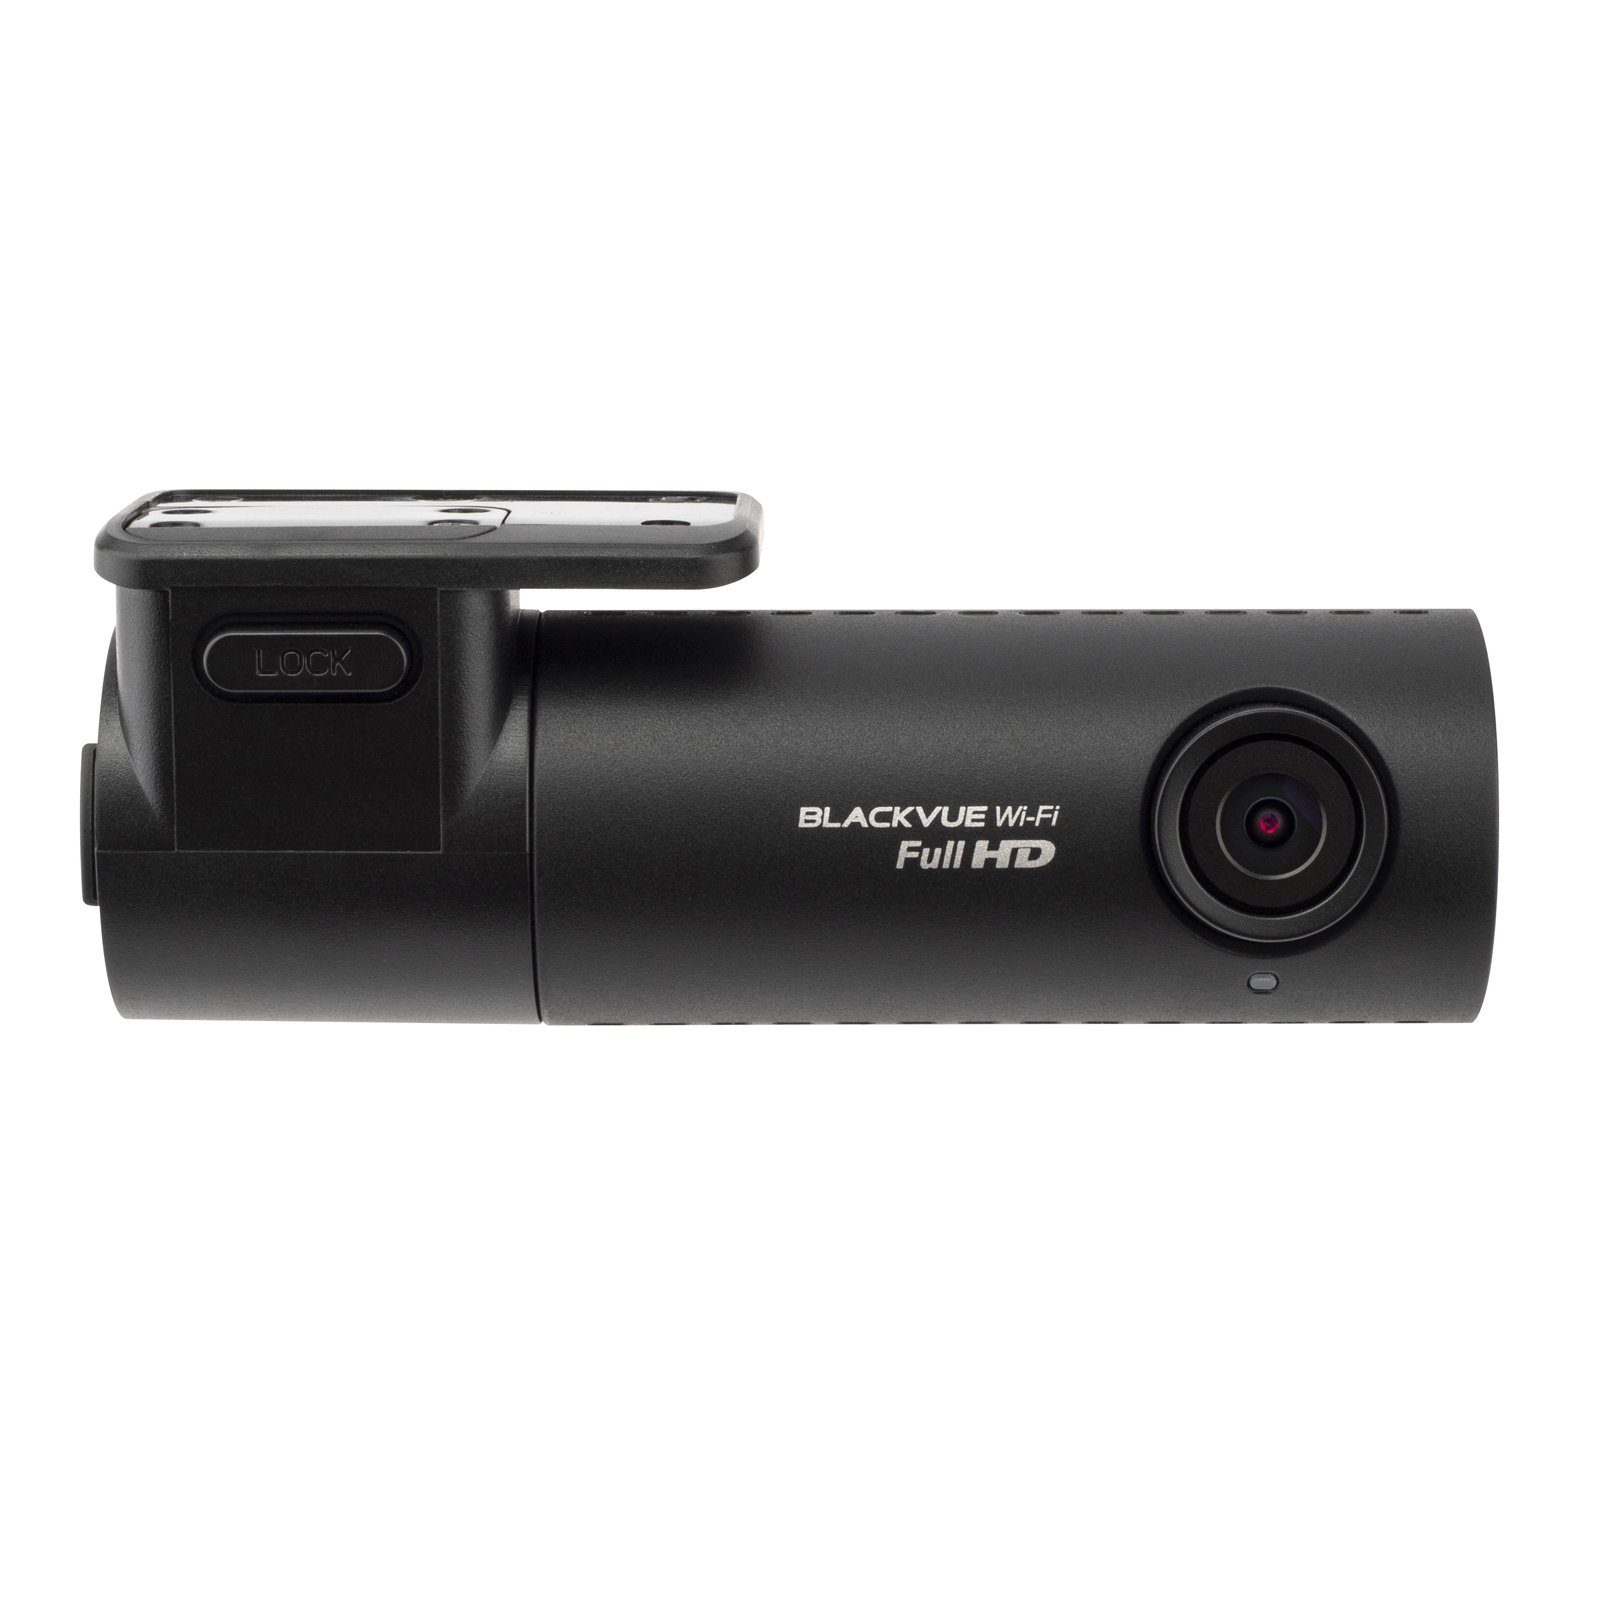 WLAN HD Dashcam DR590X-1CH BlackVue Full BlackVue Dashcam 32GB